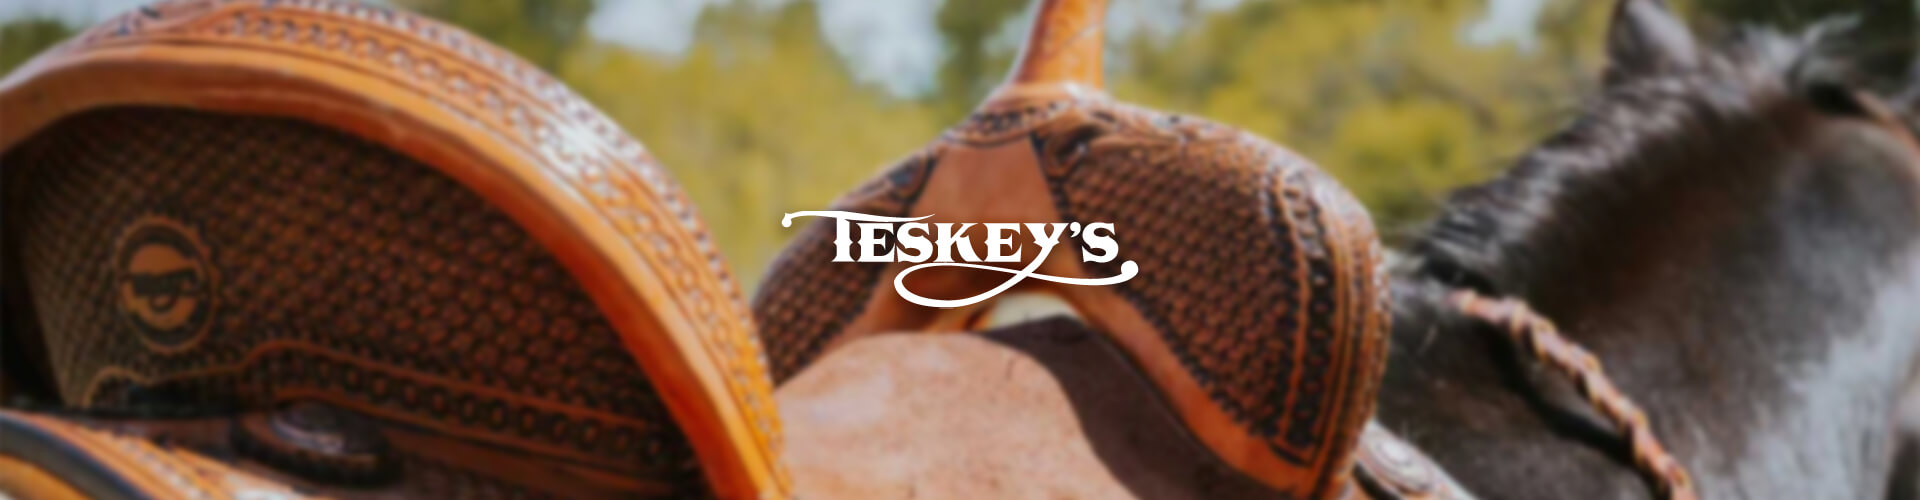 Case Study - Teskey’s Saddle Shop